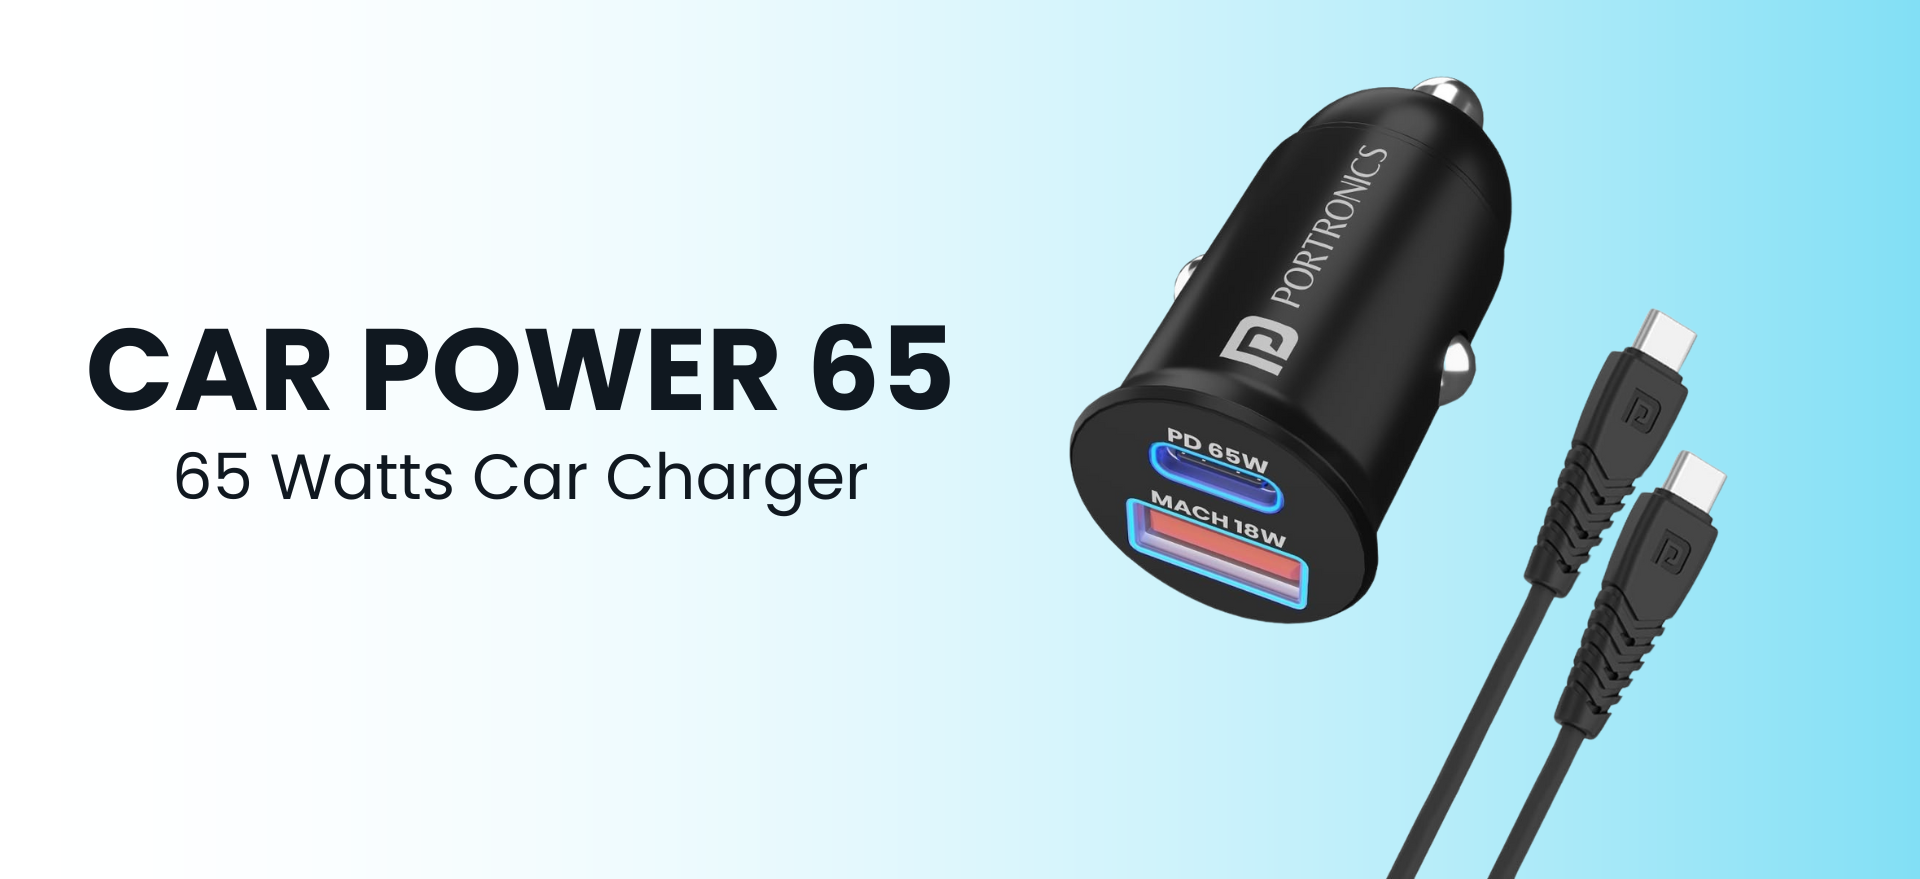 Portronics Car Power 65 - Dual-port for rapid charging